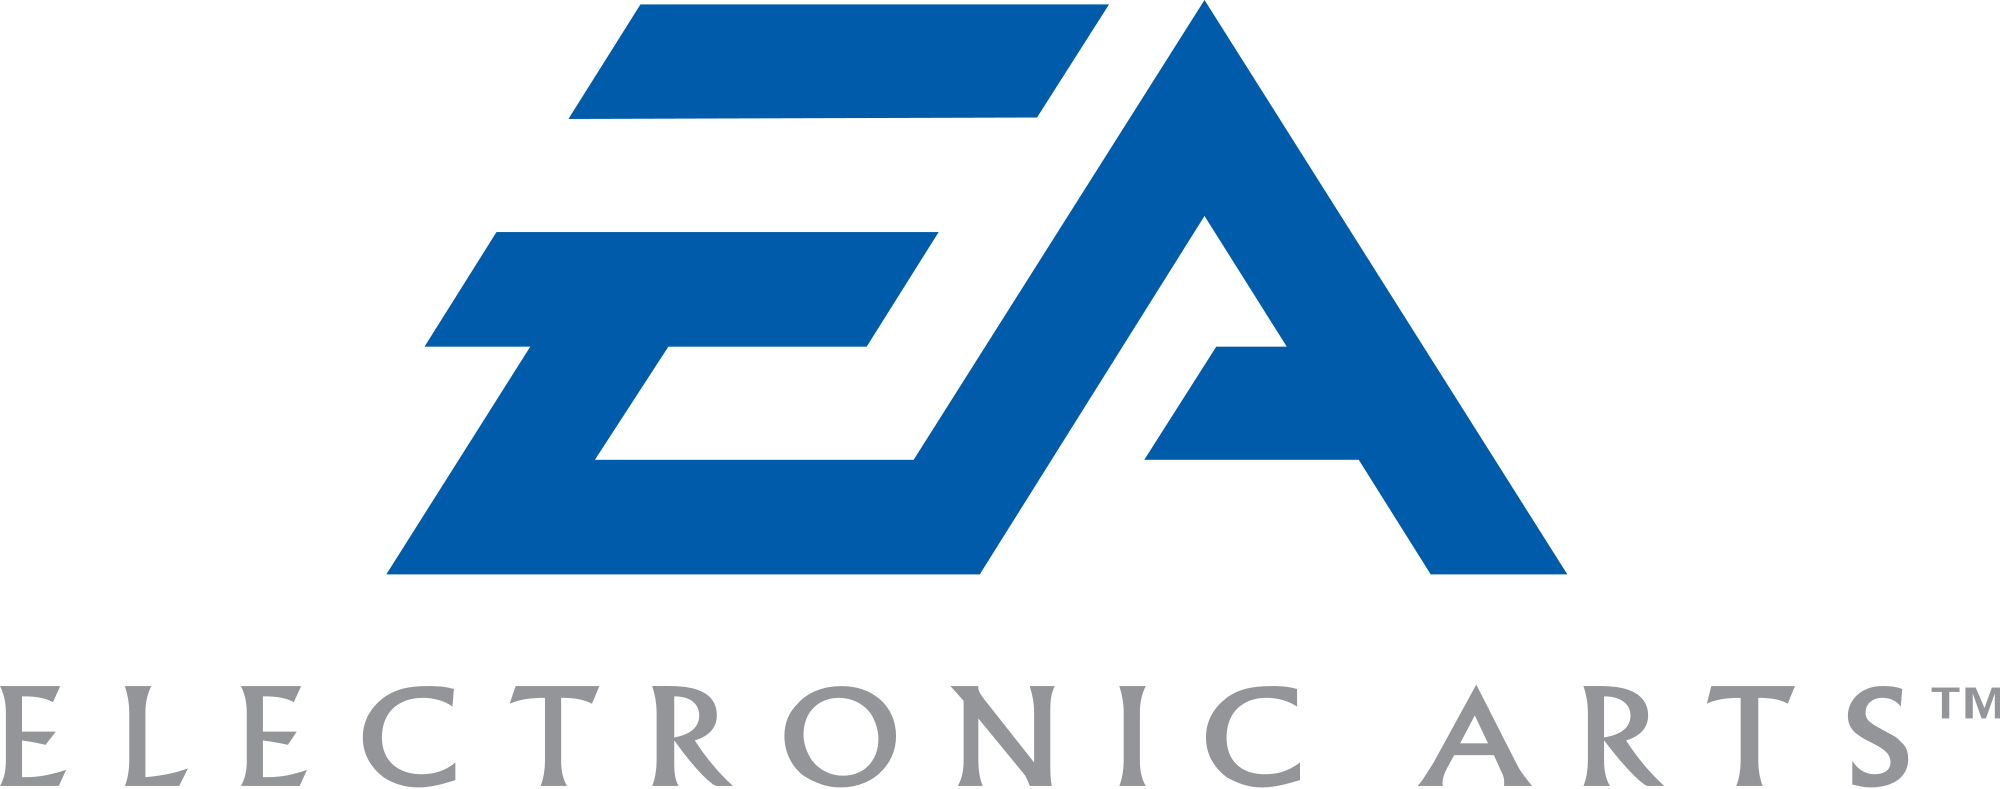 Electronic Arts Brand Logo